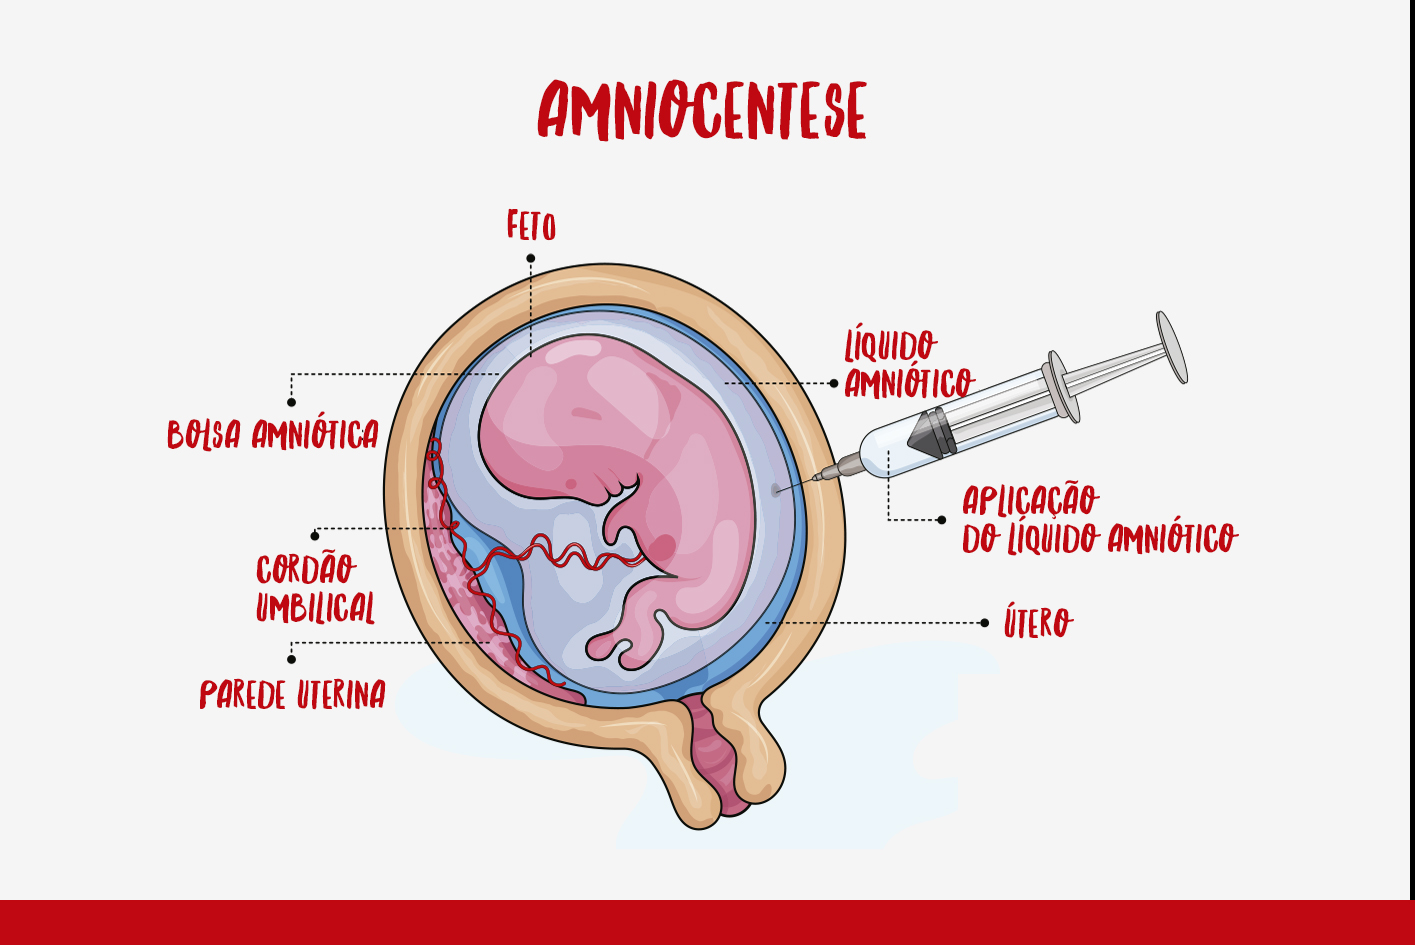 Amniocentese